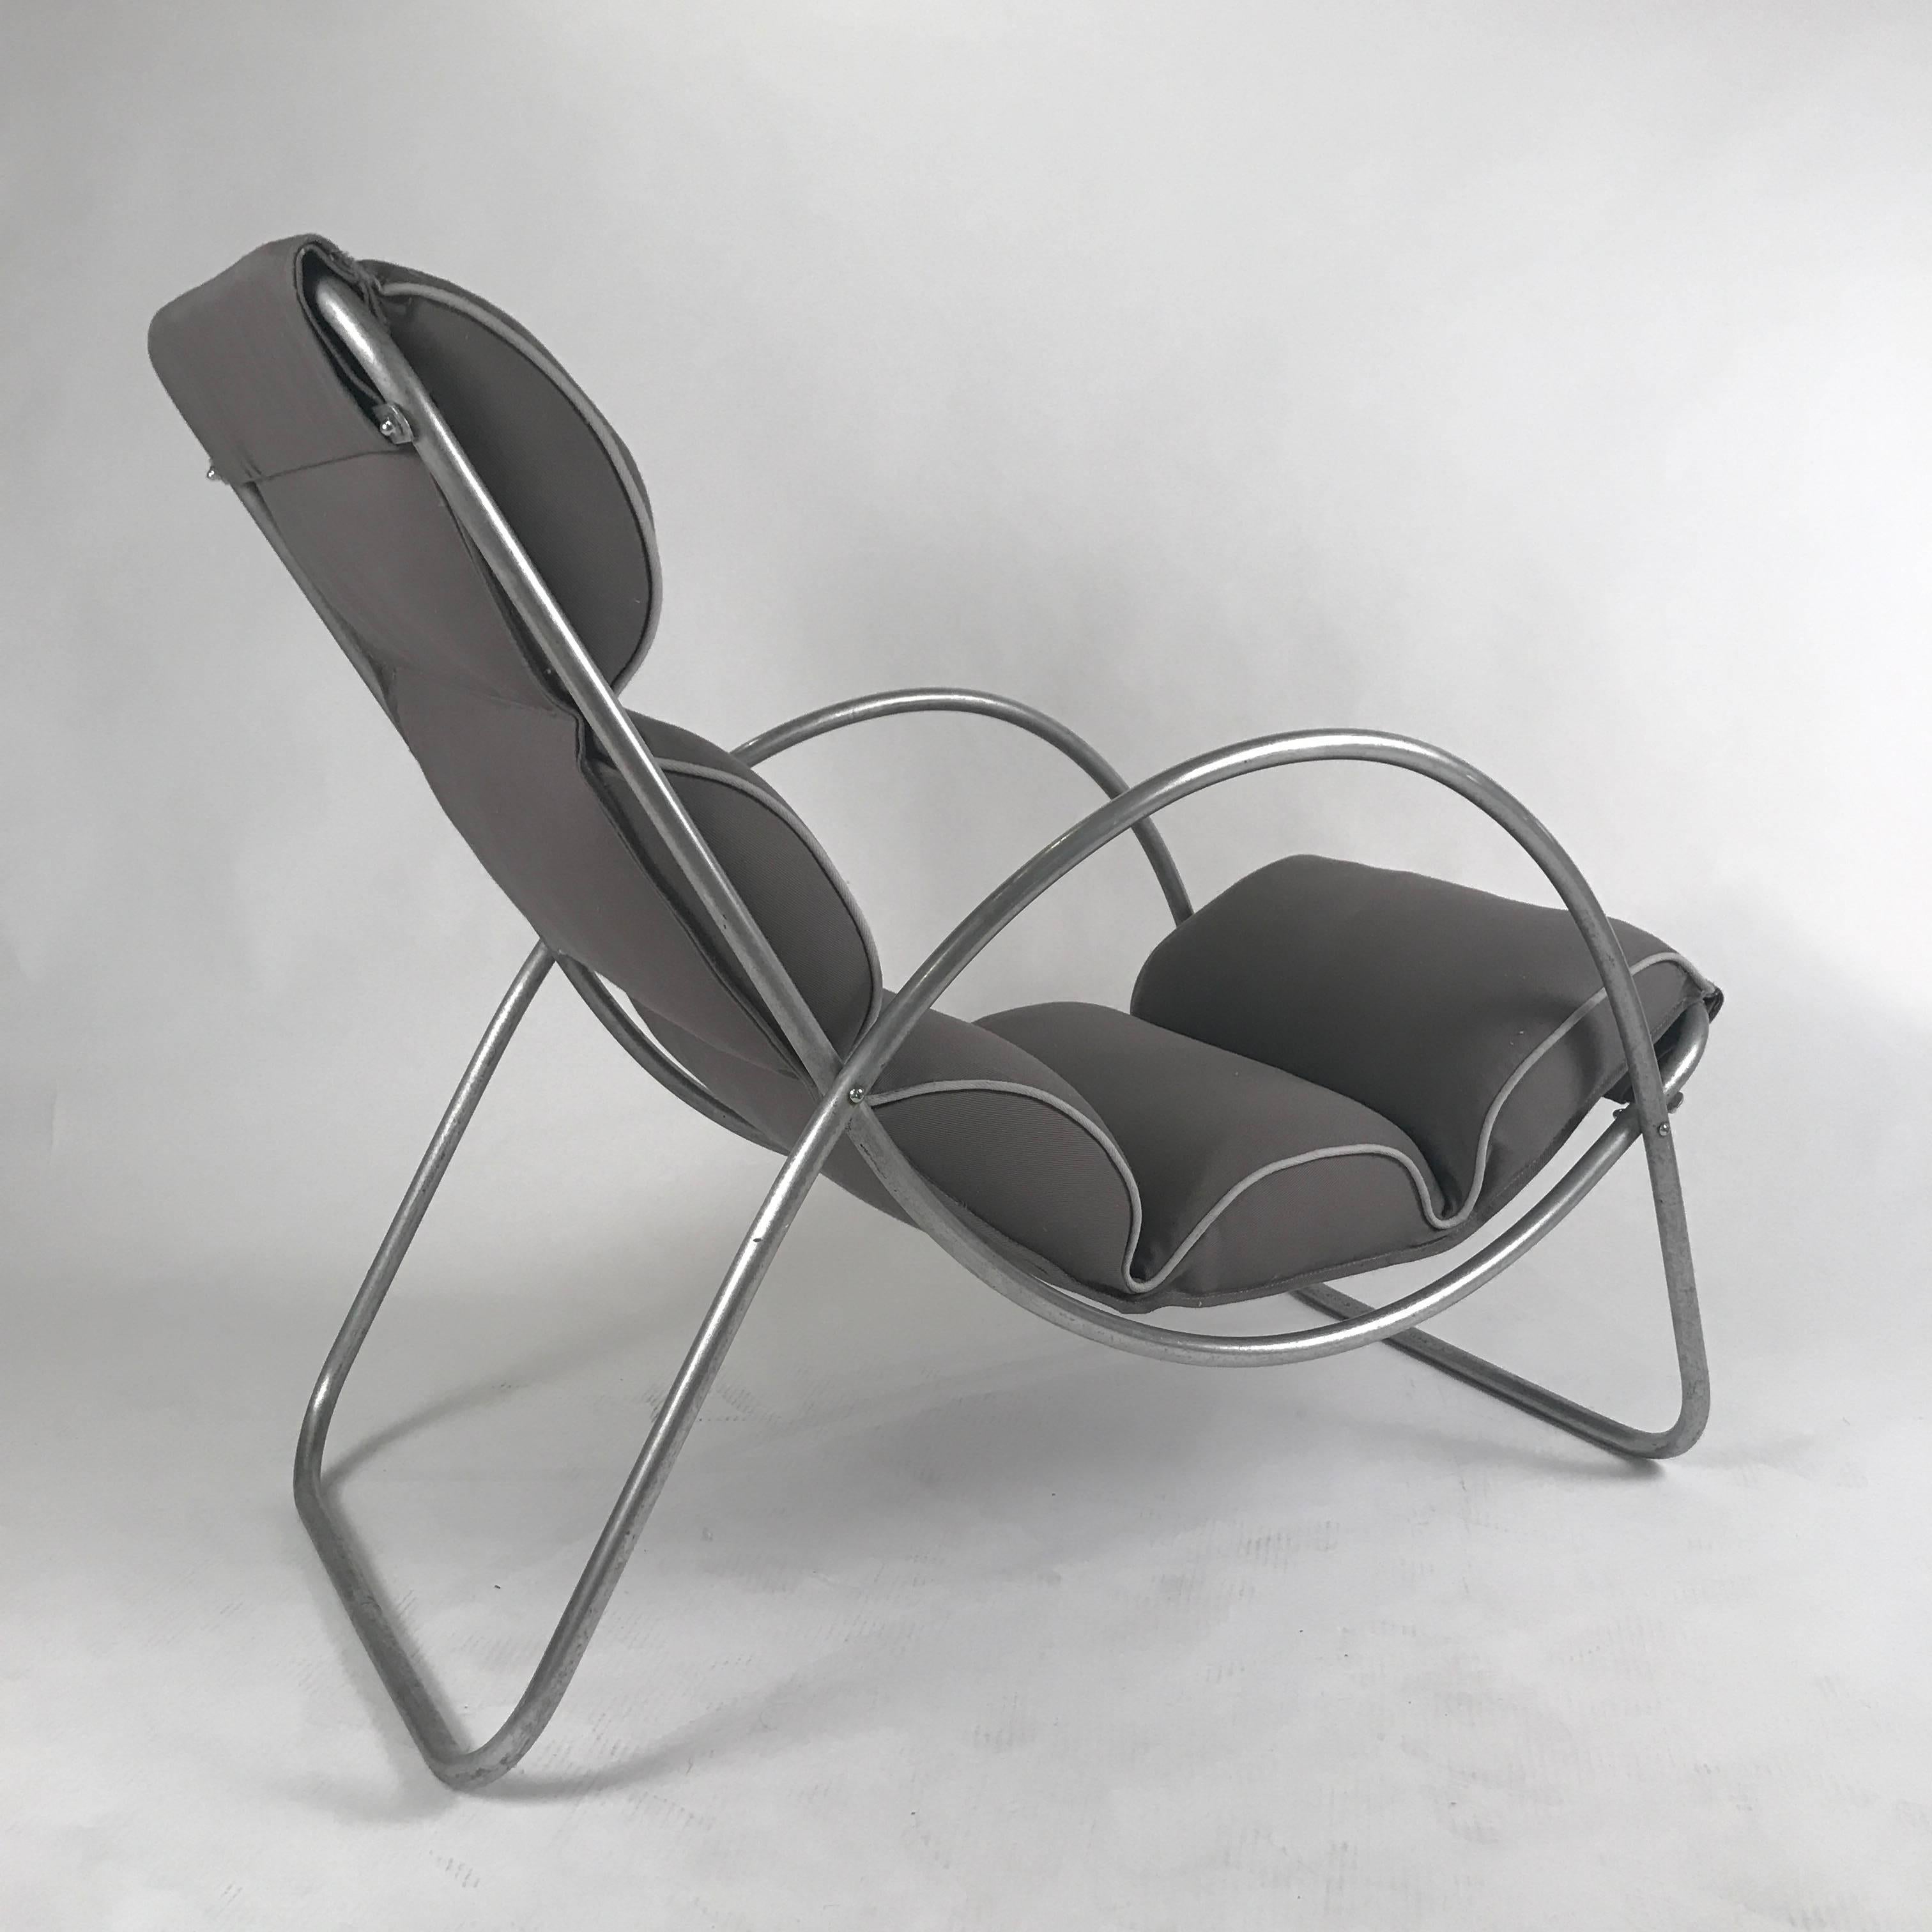 American Pair of Halliburton Lounge Chairs, 1930s Art Deco Machine Age Modernist Design